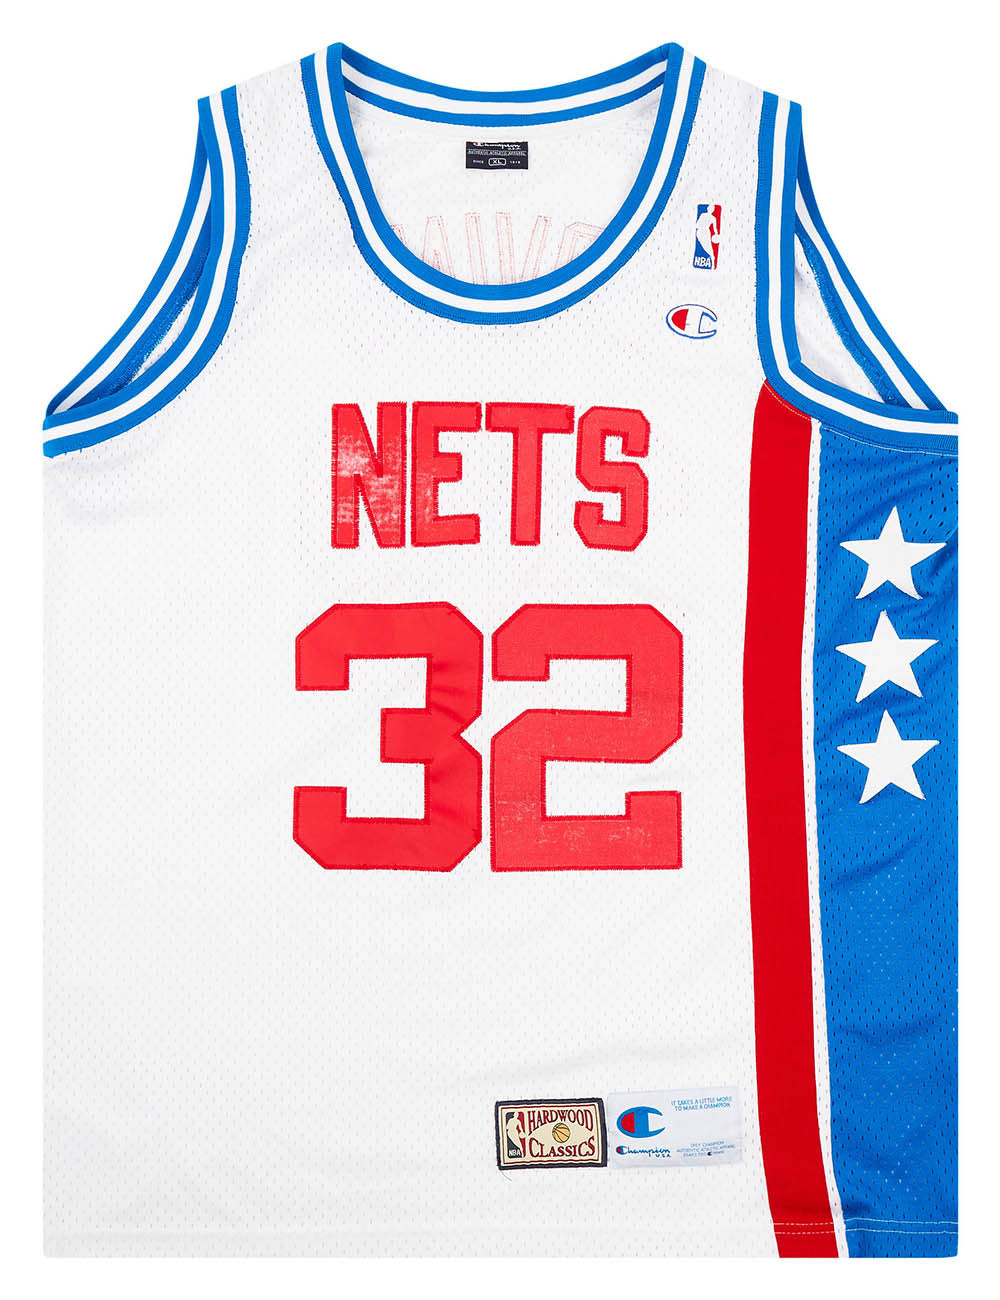 NJ Nets style – upperupper